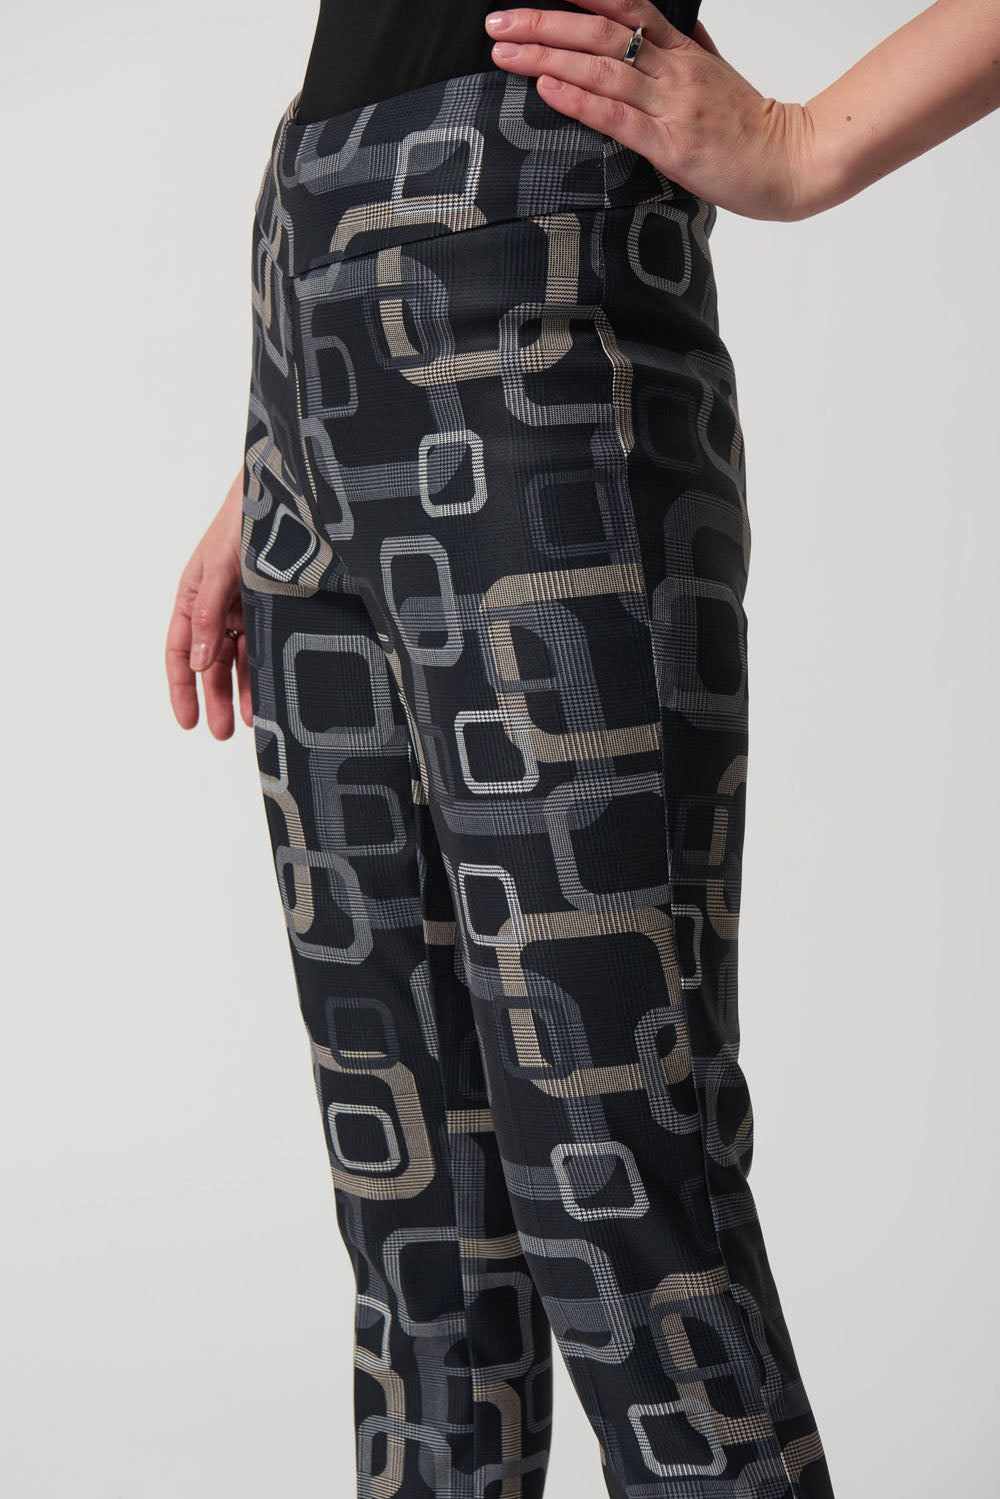 Art Inspired Denim Pants, Joseph Ribkoff, Style:213973